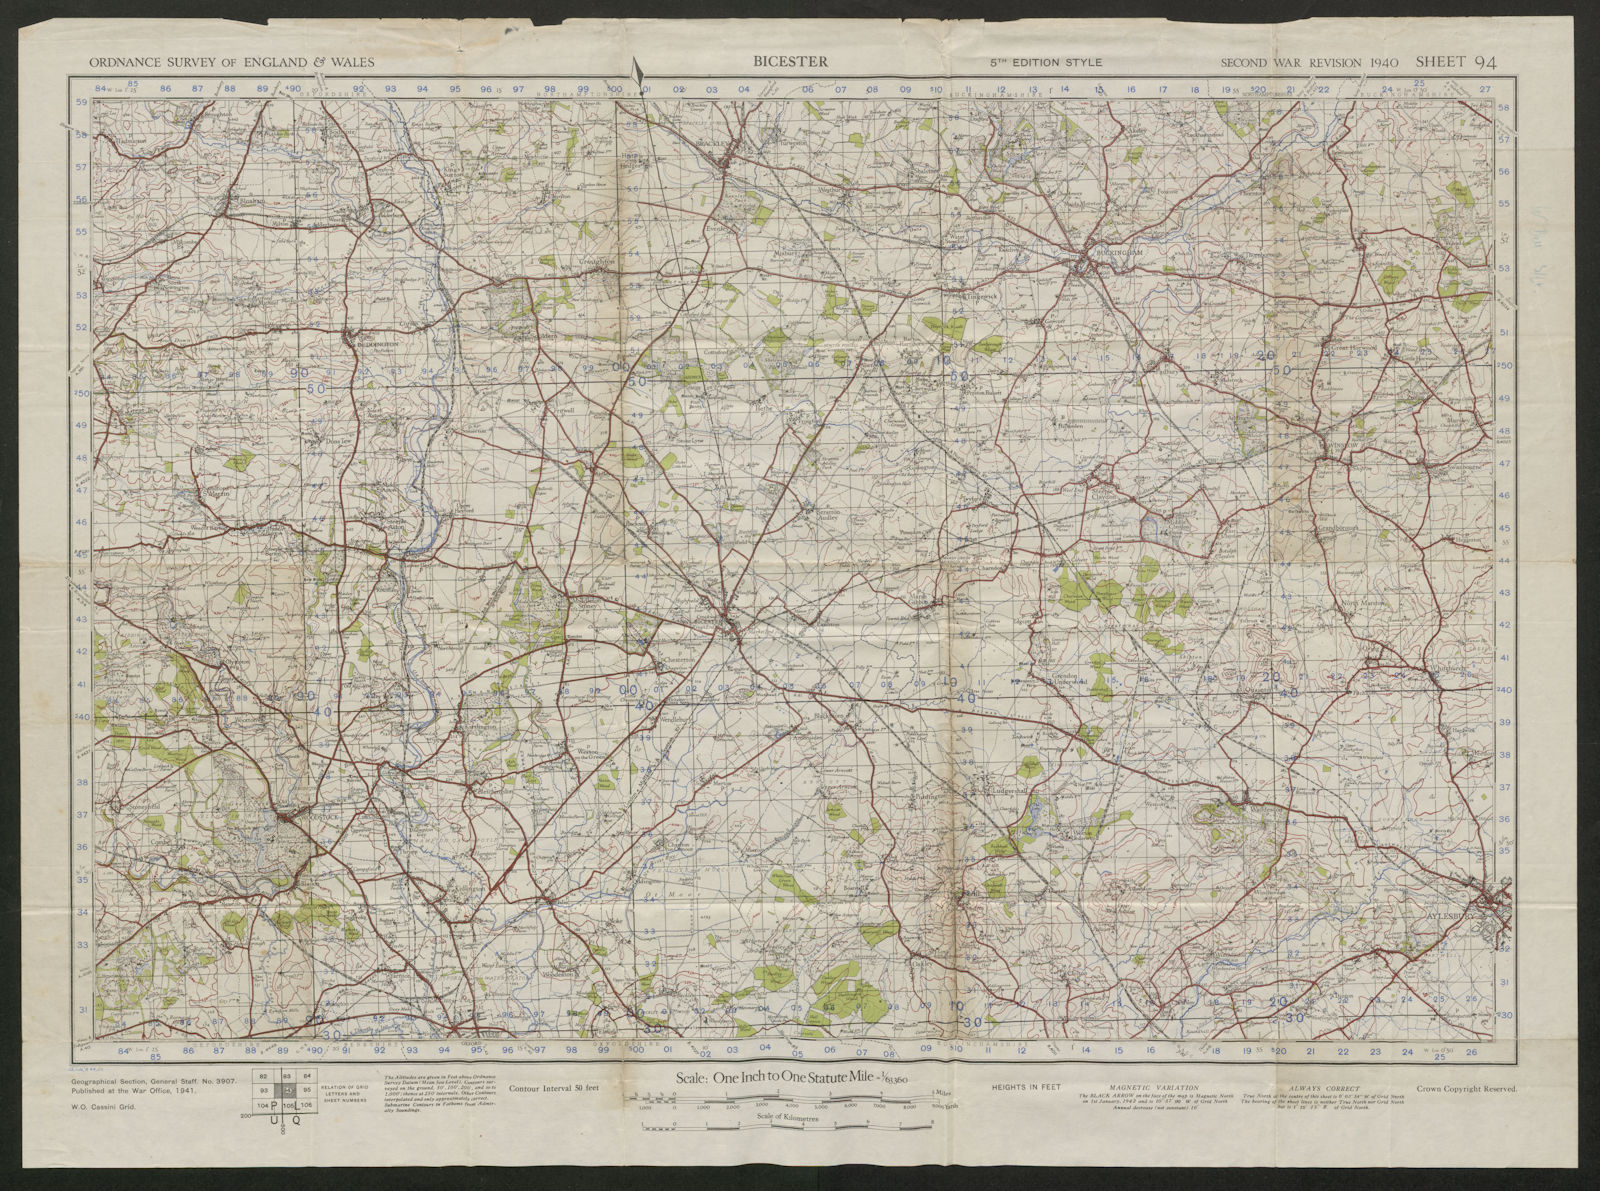 War Revision Sheet 94 BICESTER. Woodstock Aylesbury. ORDNANCE SURVEY 1941 map